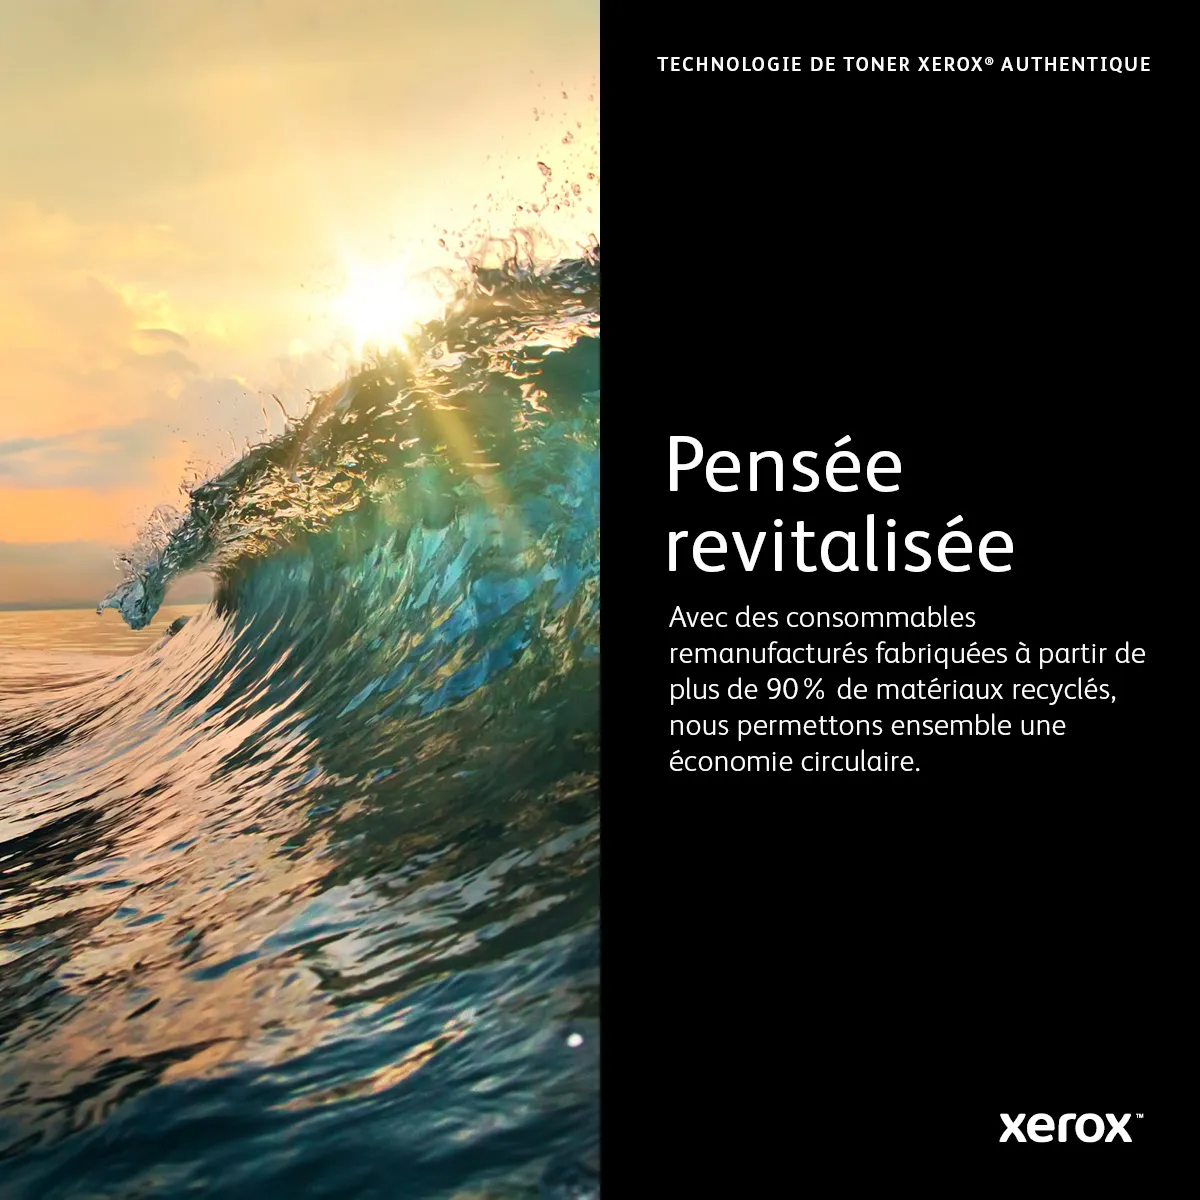 Vente Cartouche de toner Noir de Grande capacité Xerox Xerox au meilleur prix - visuel 10